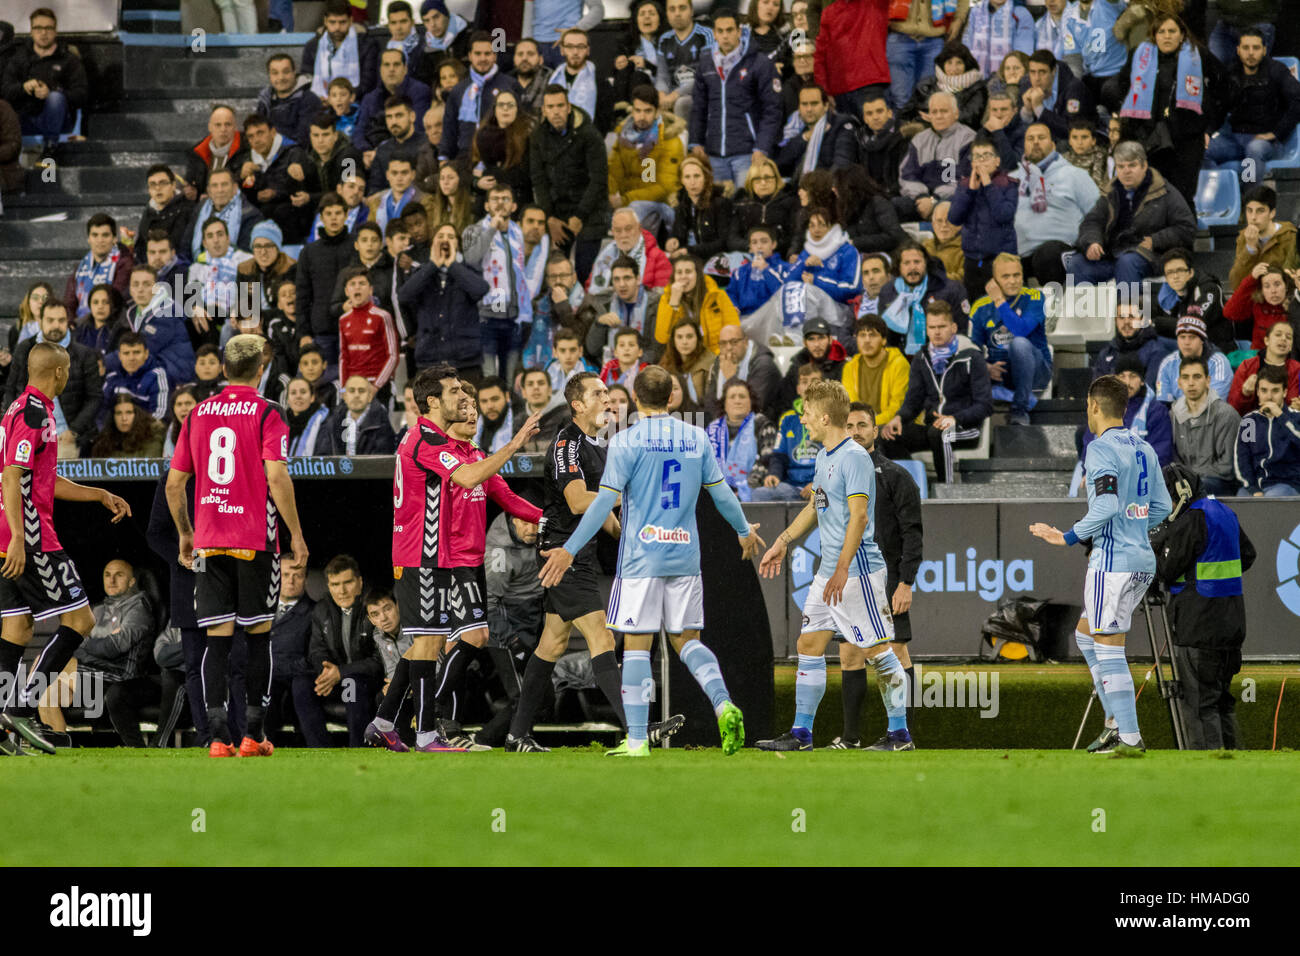 Vigo, Spain. 2nd Feb, 2017. Copa Del Rey semi-final match between Real Club Celta de Vigo and Deportivo Alaves in Balaidos stadium, Vigo. Credit: Brais Seara/Alamy Live News Stock Photo